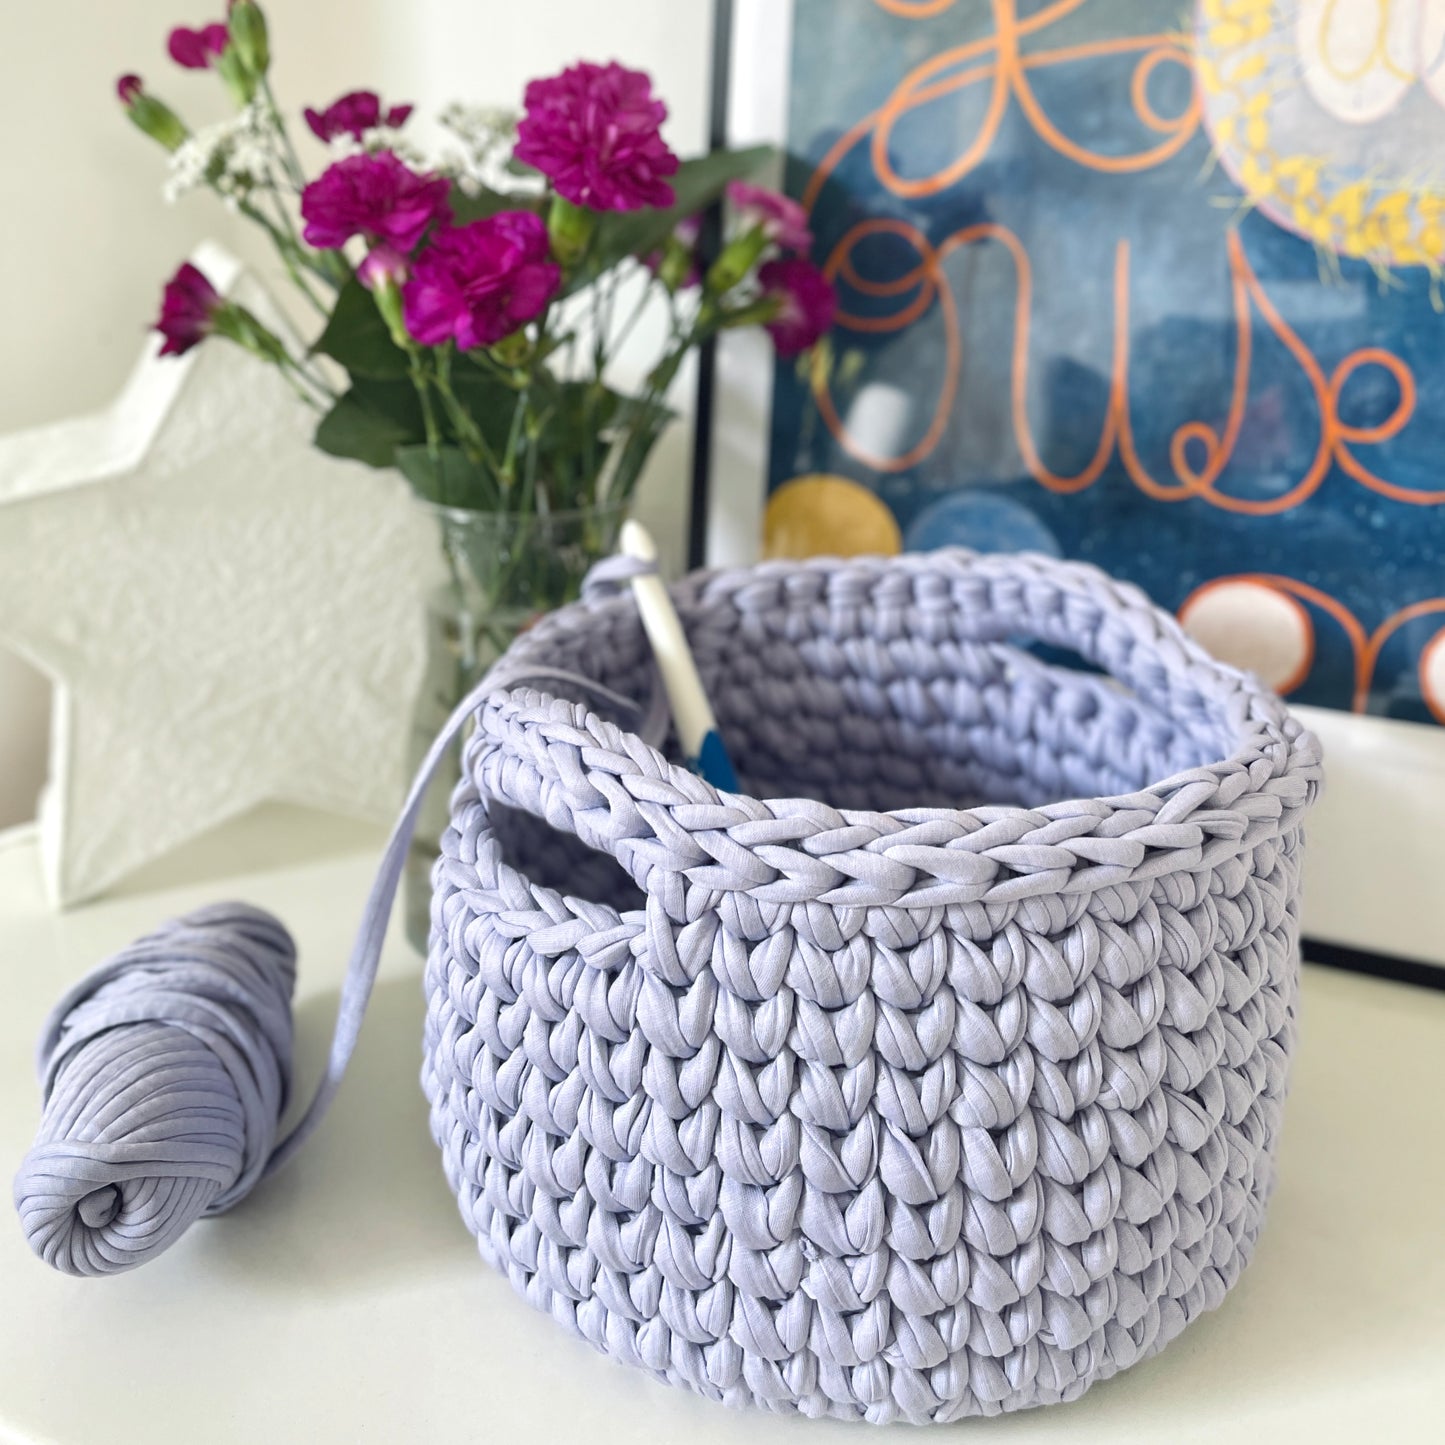 Modern Basket Workshop: Crochet with T-shirt Yarn